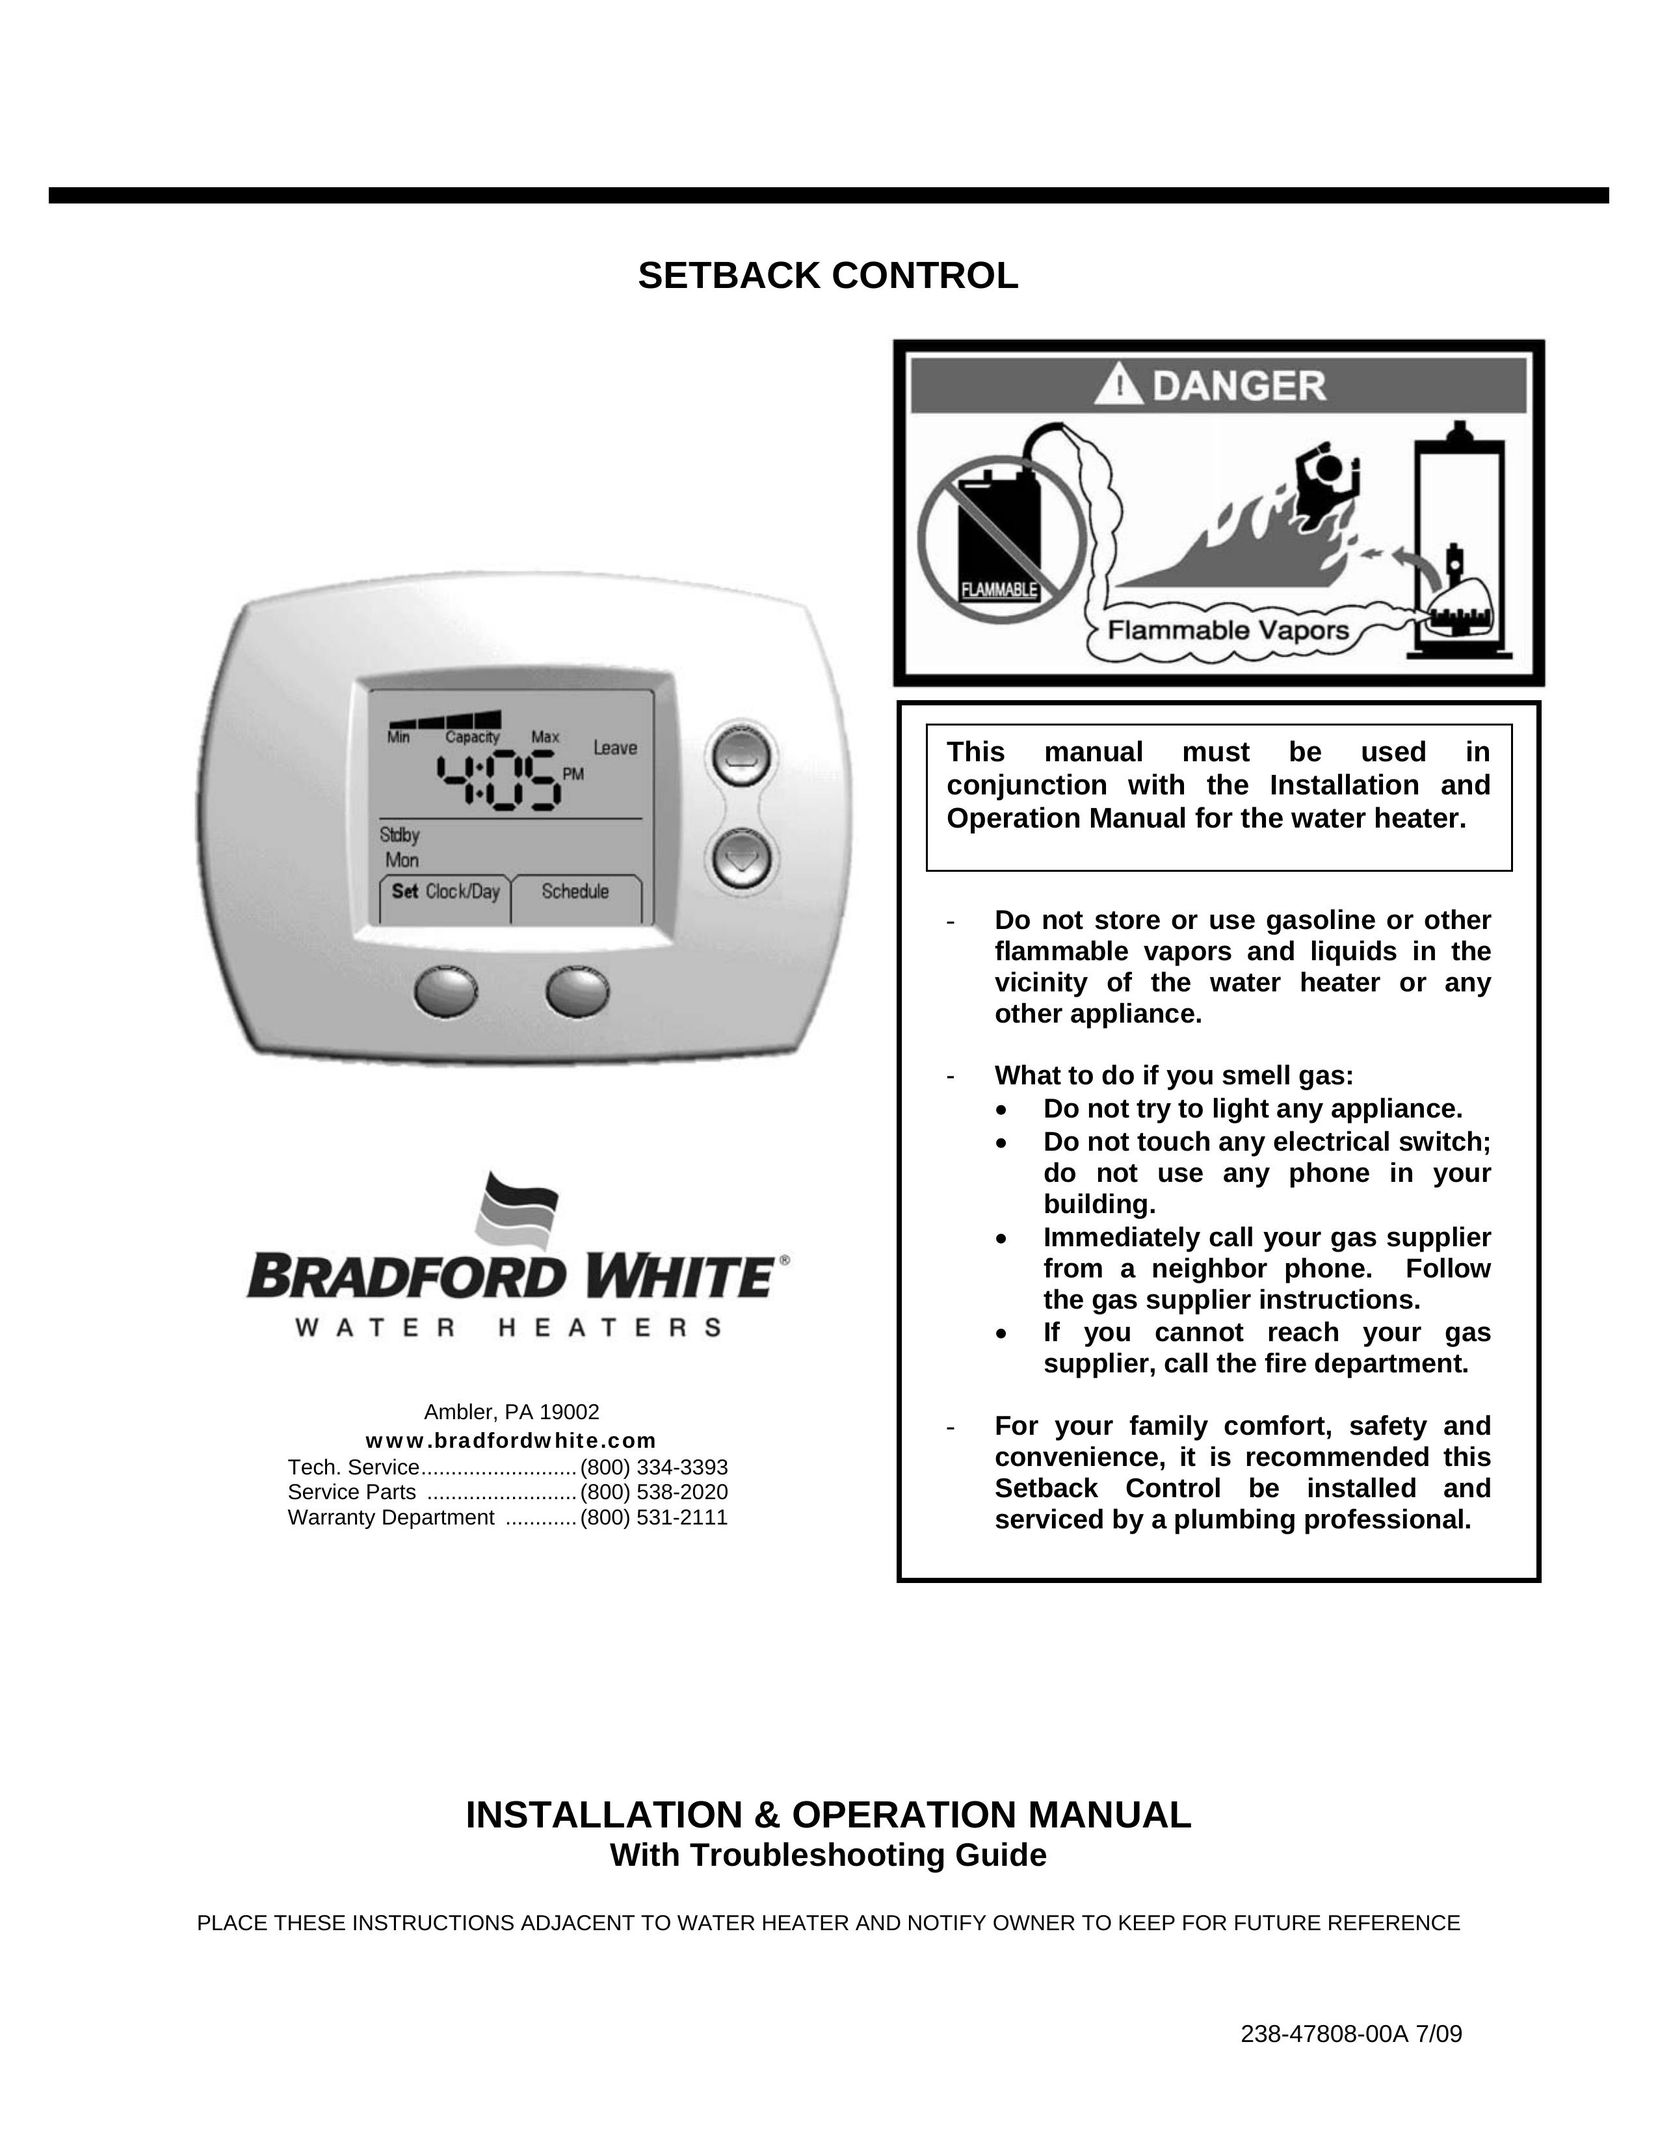 Bradford-White Corp 238-47808-00A Water Heater User Manual